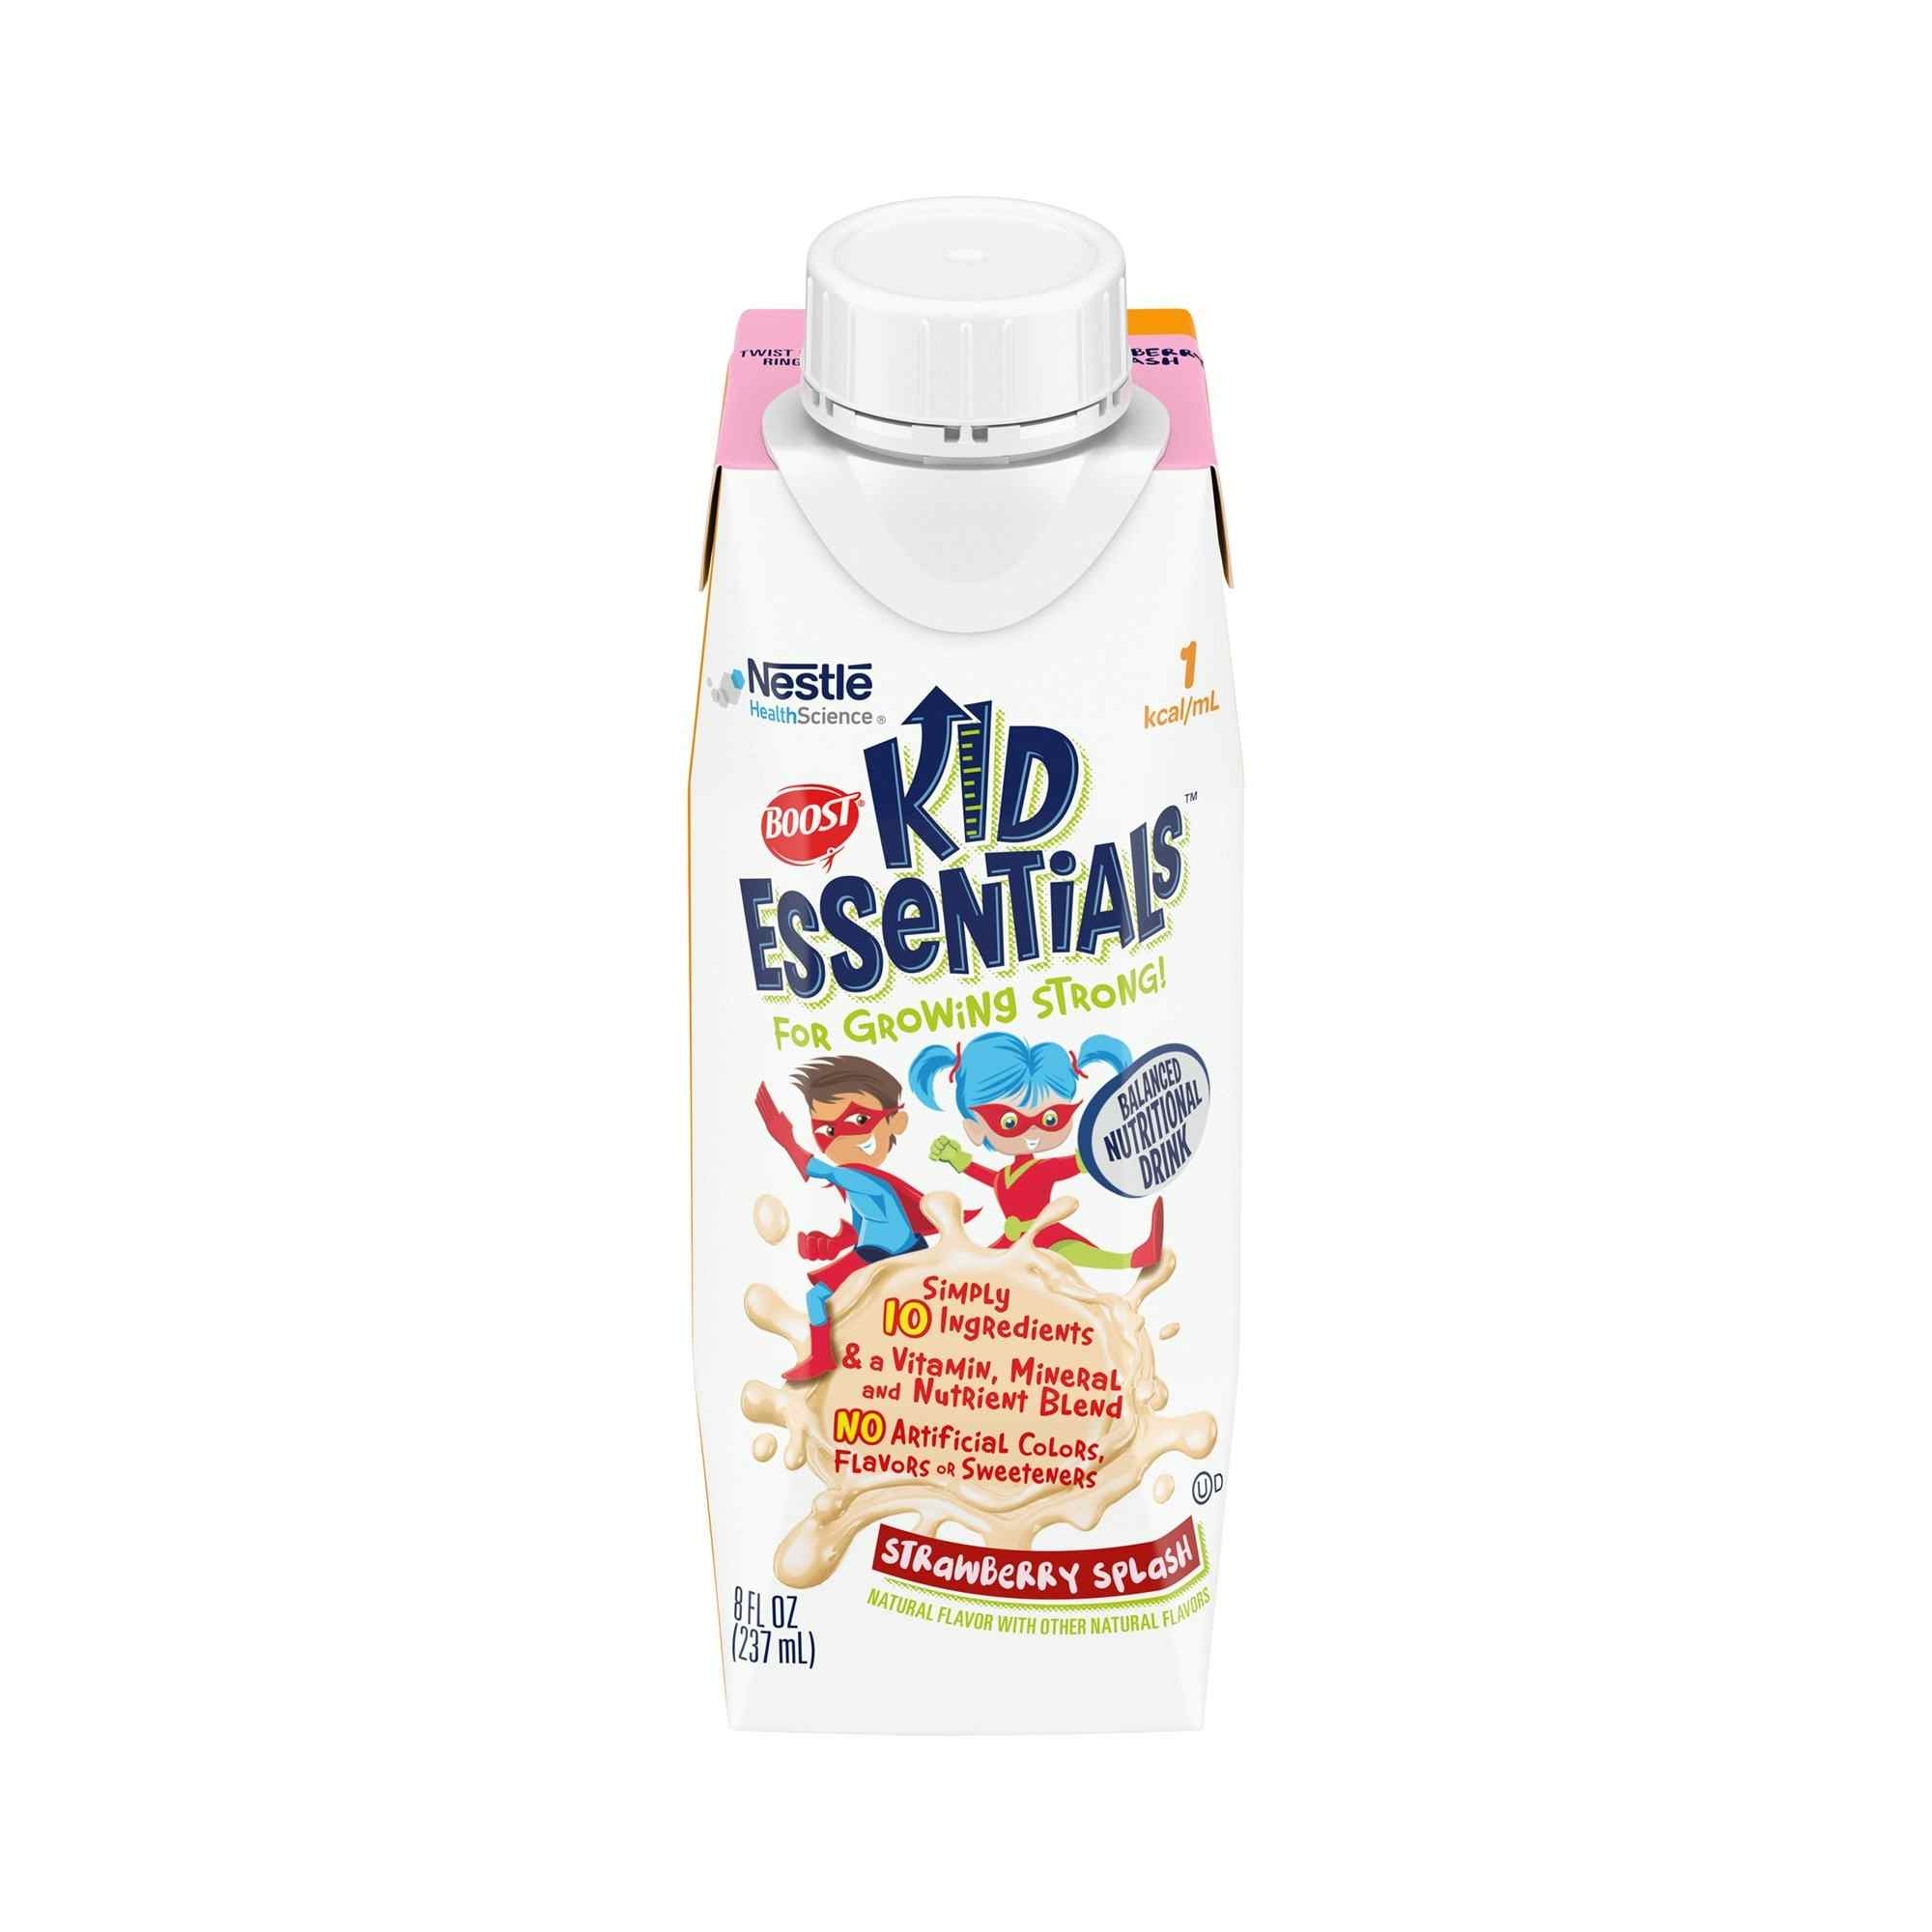 Boost Kid Essentials Balanced Nutritional Drink, Strawberry Splash, 8 oz., 00043900285740, Case of 24